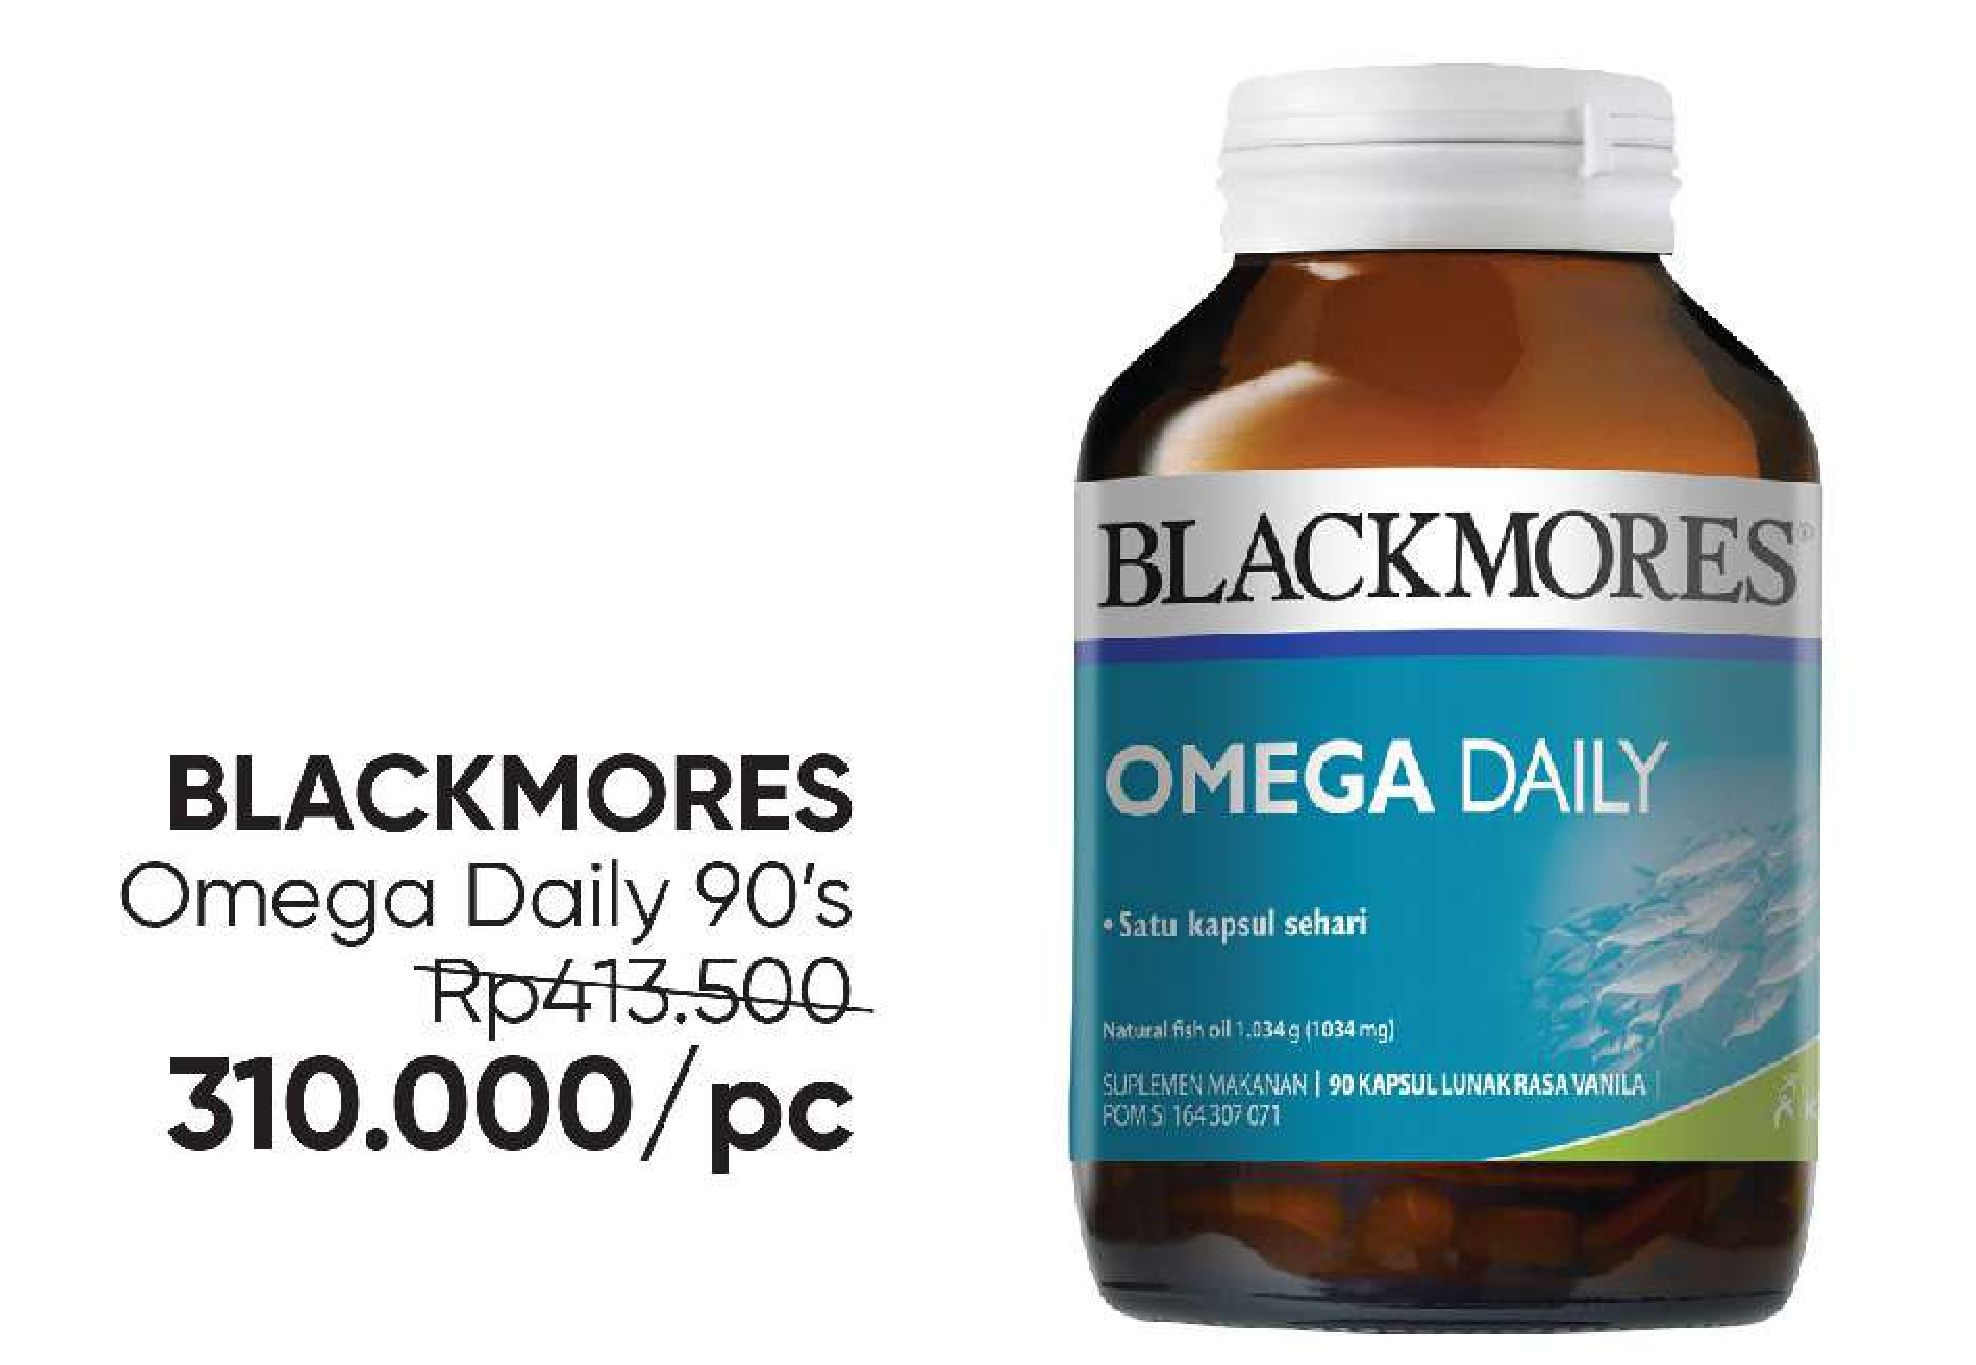 Blackmores Omega Daily